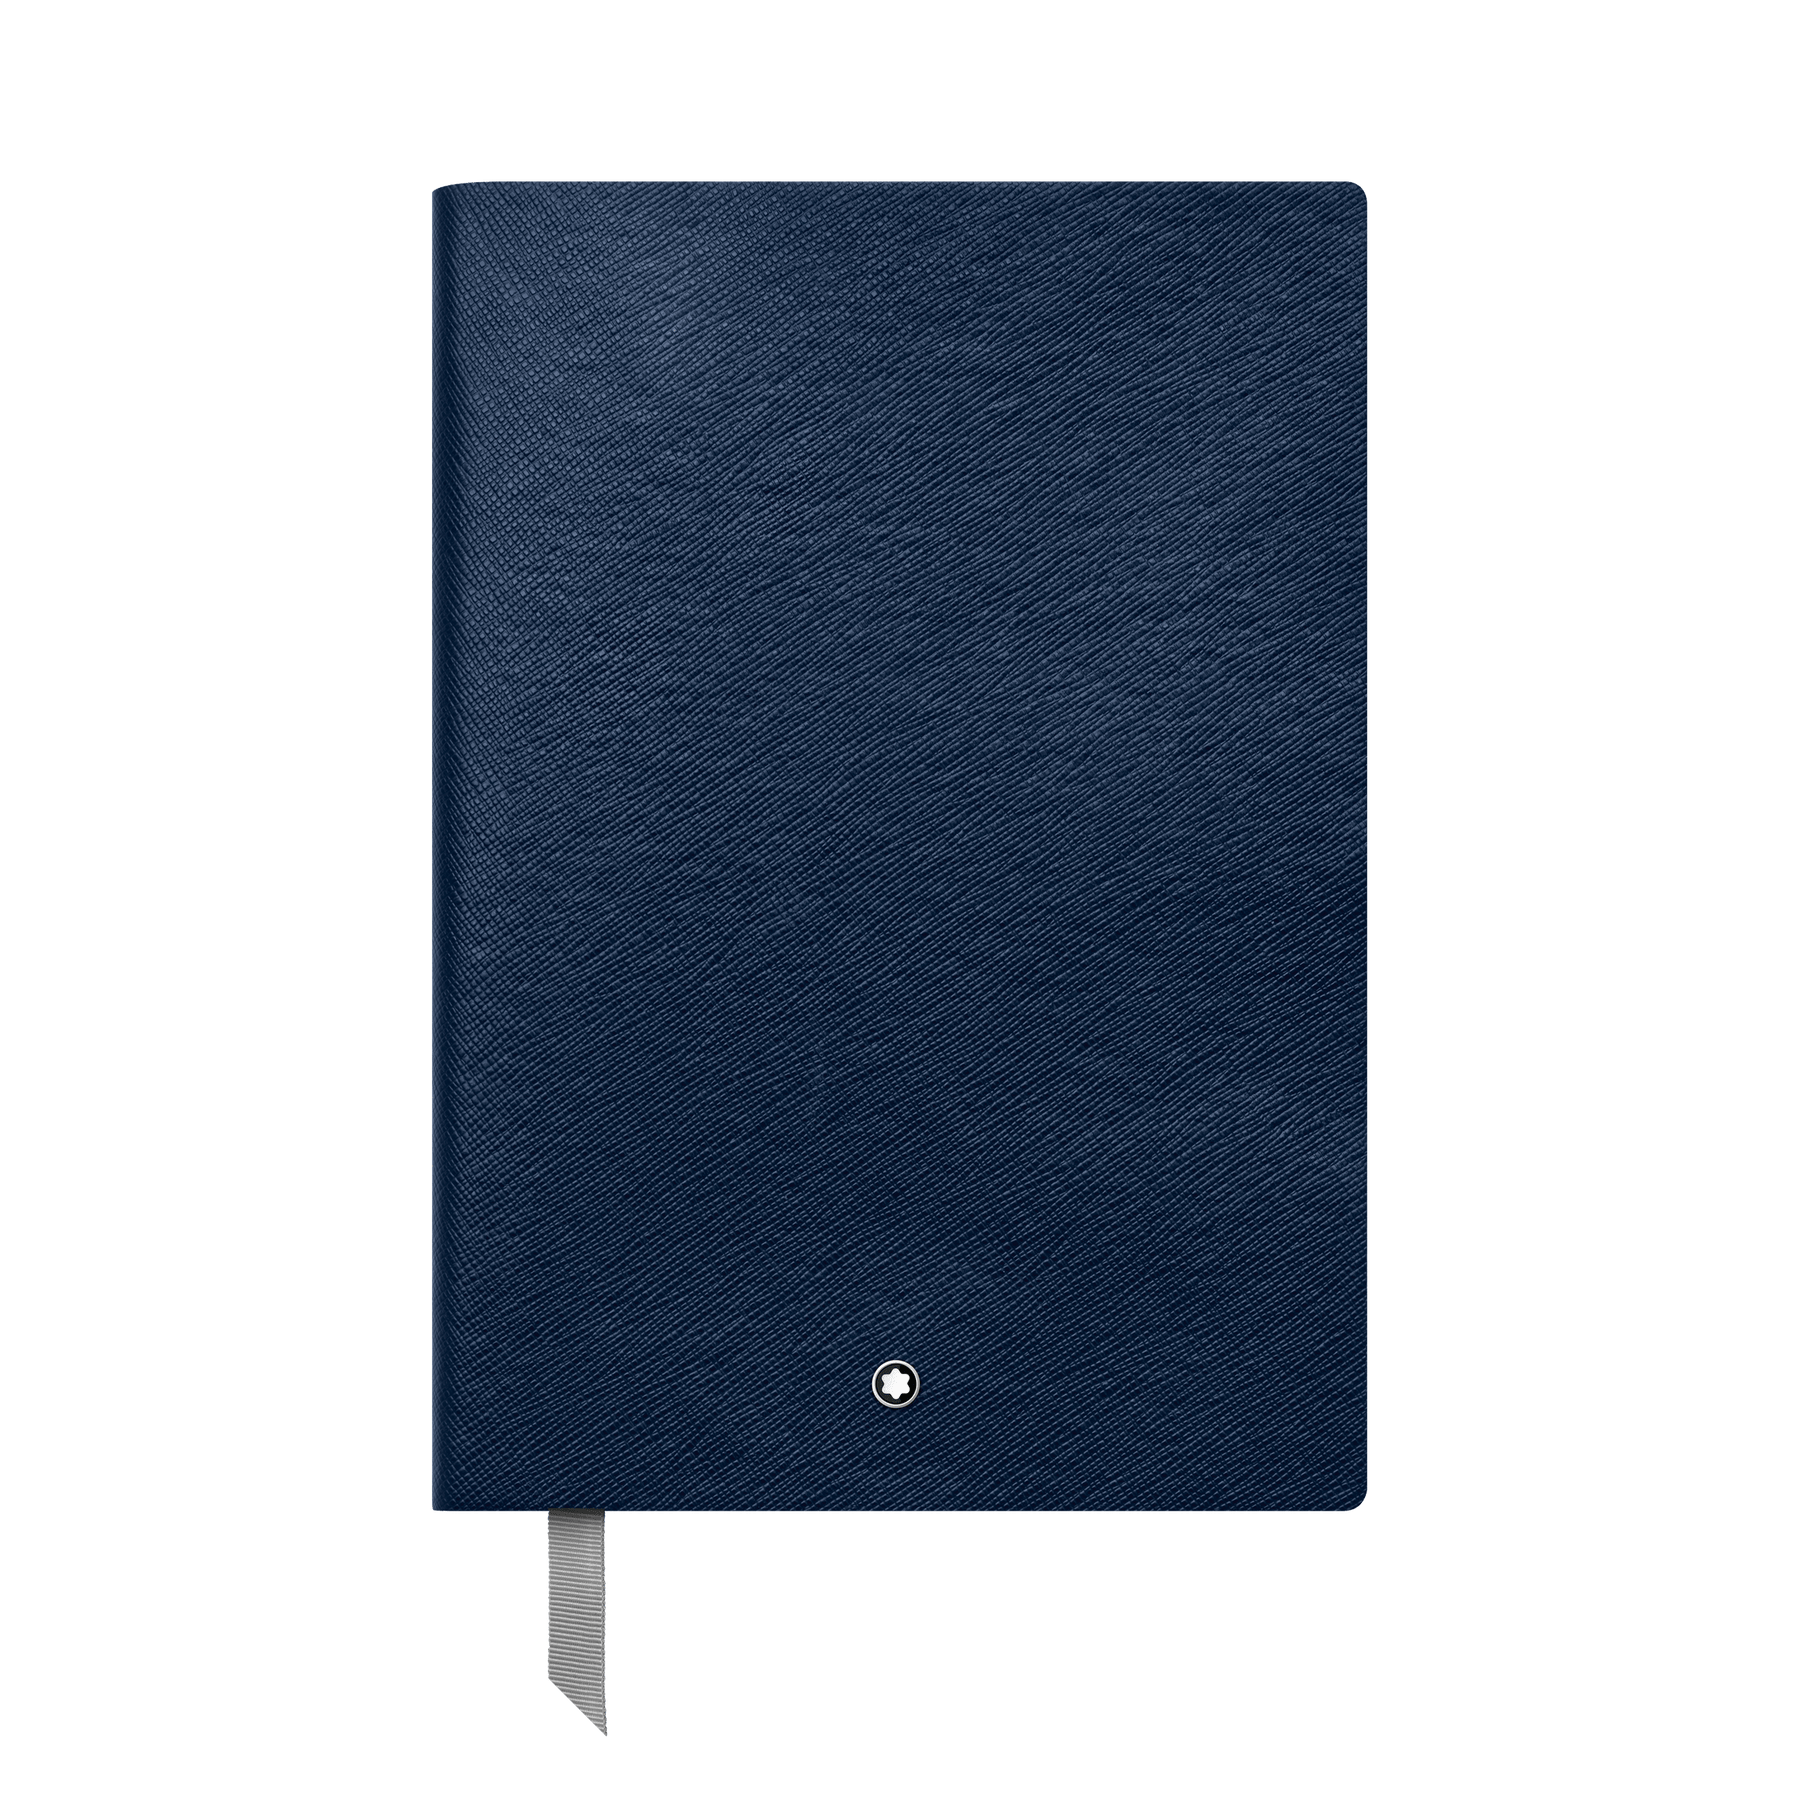 Montblanc Fine Stationery Notebook #146 Indigo, lined